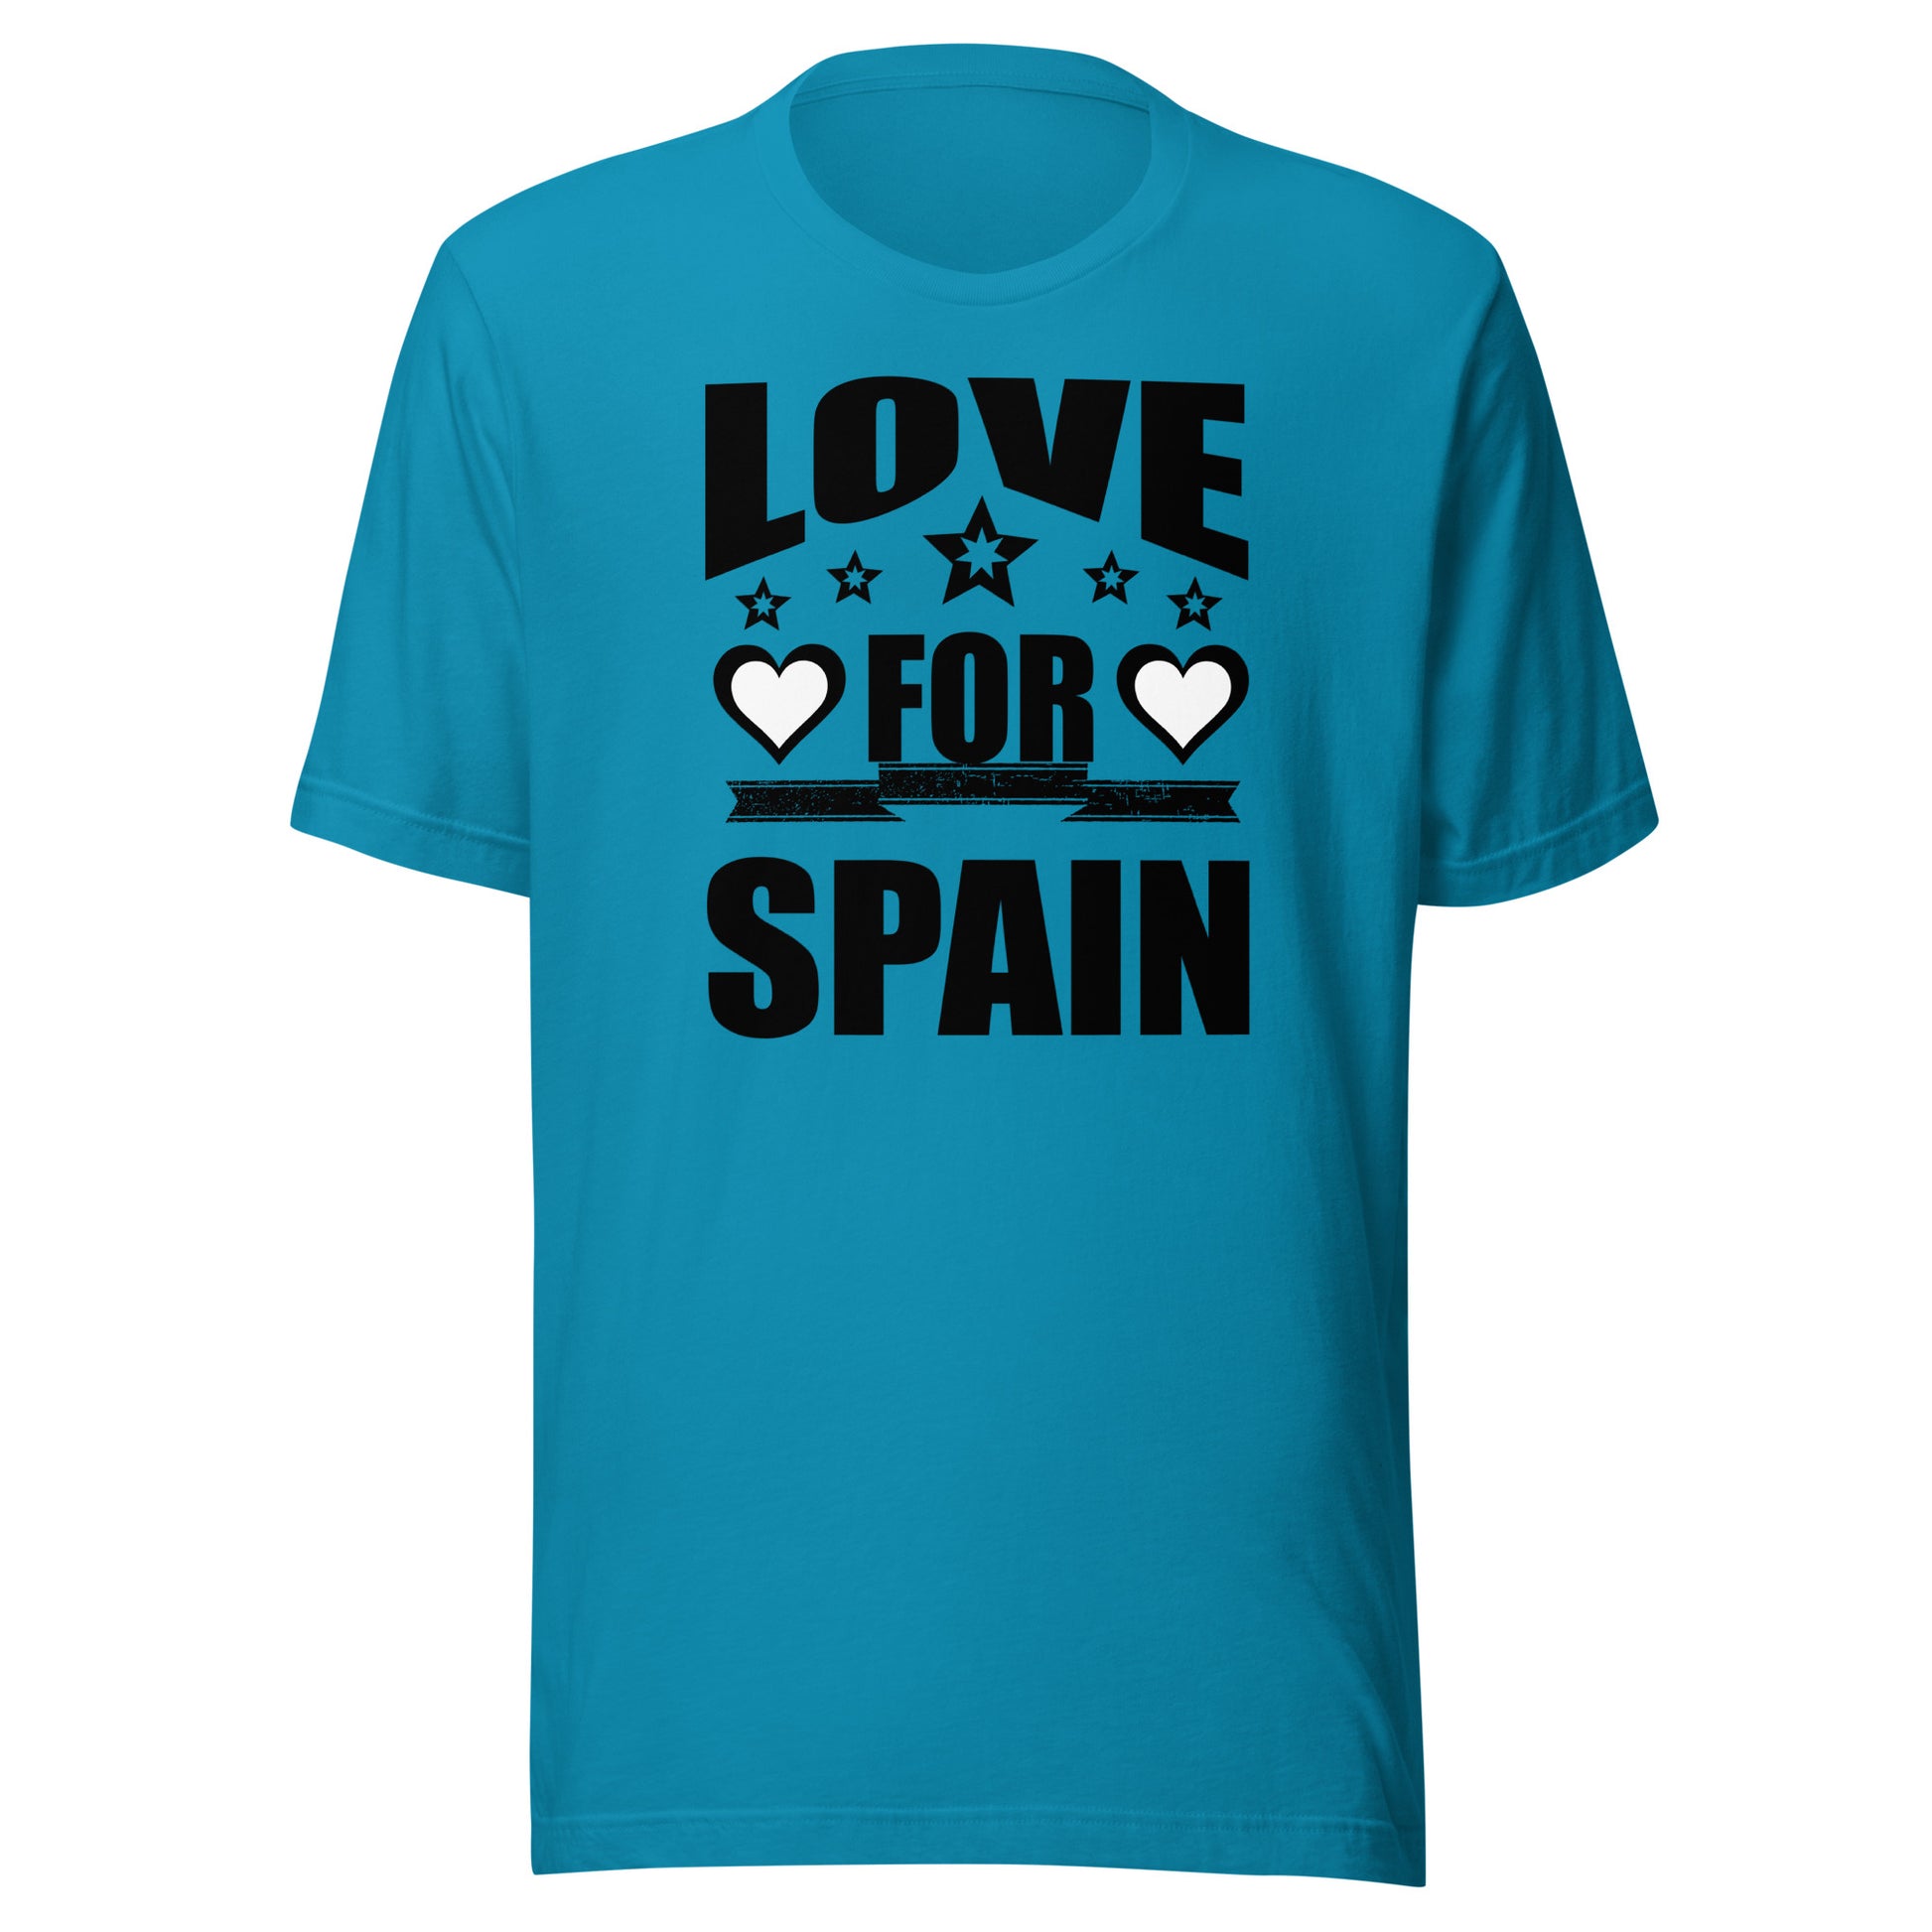 T-shirt for Spain Tourists Aqua Color